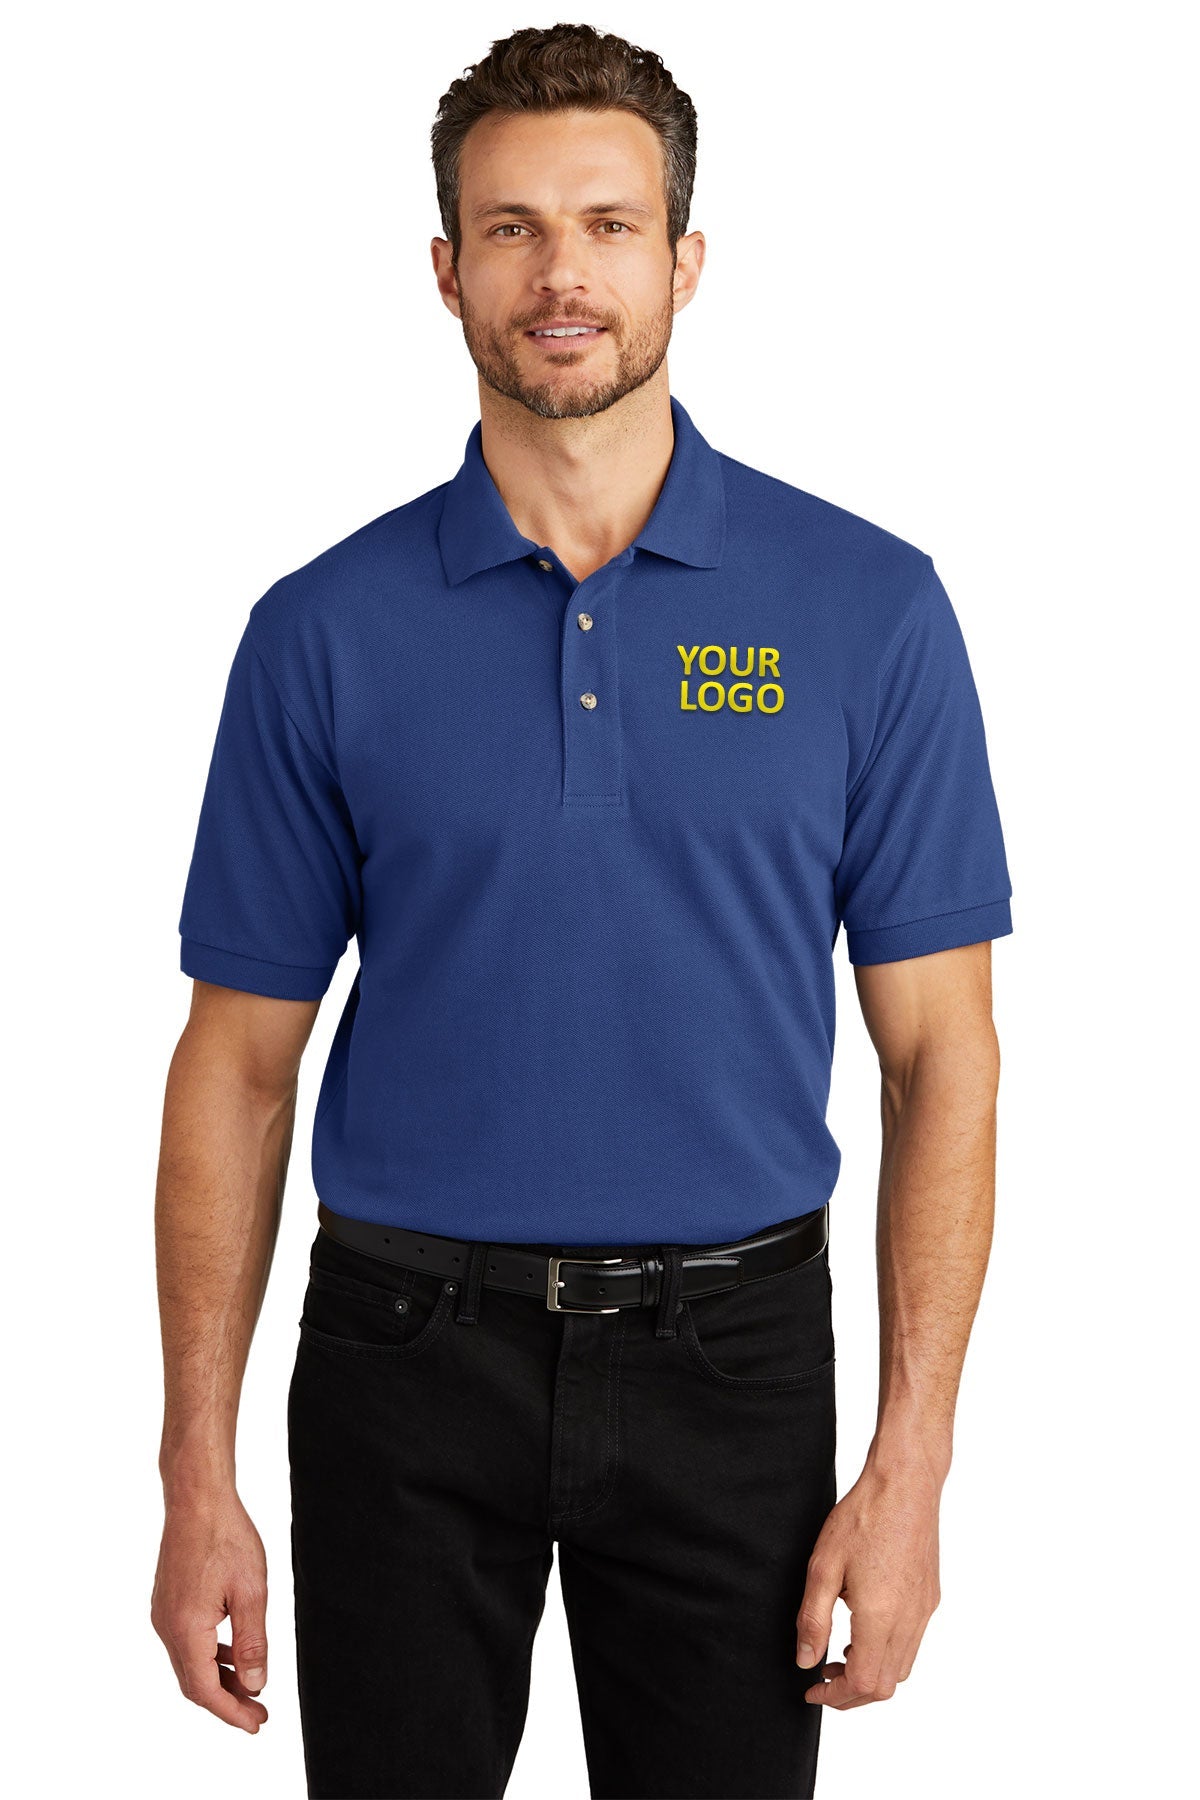 port authority royal k420 polo shirts with company logo